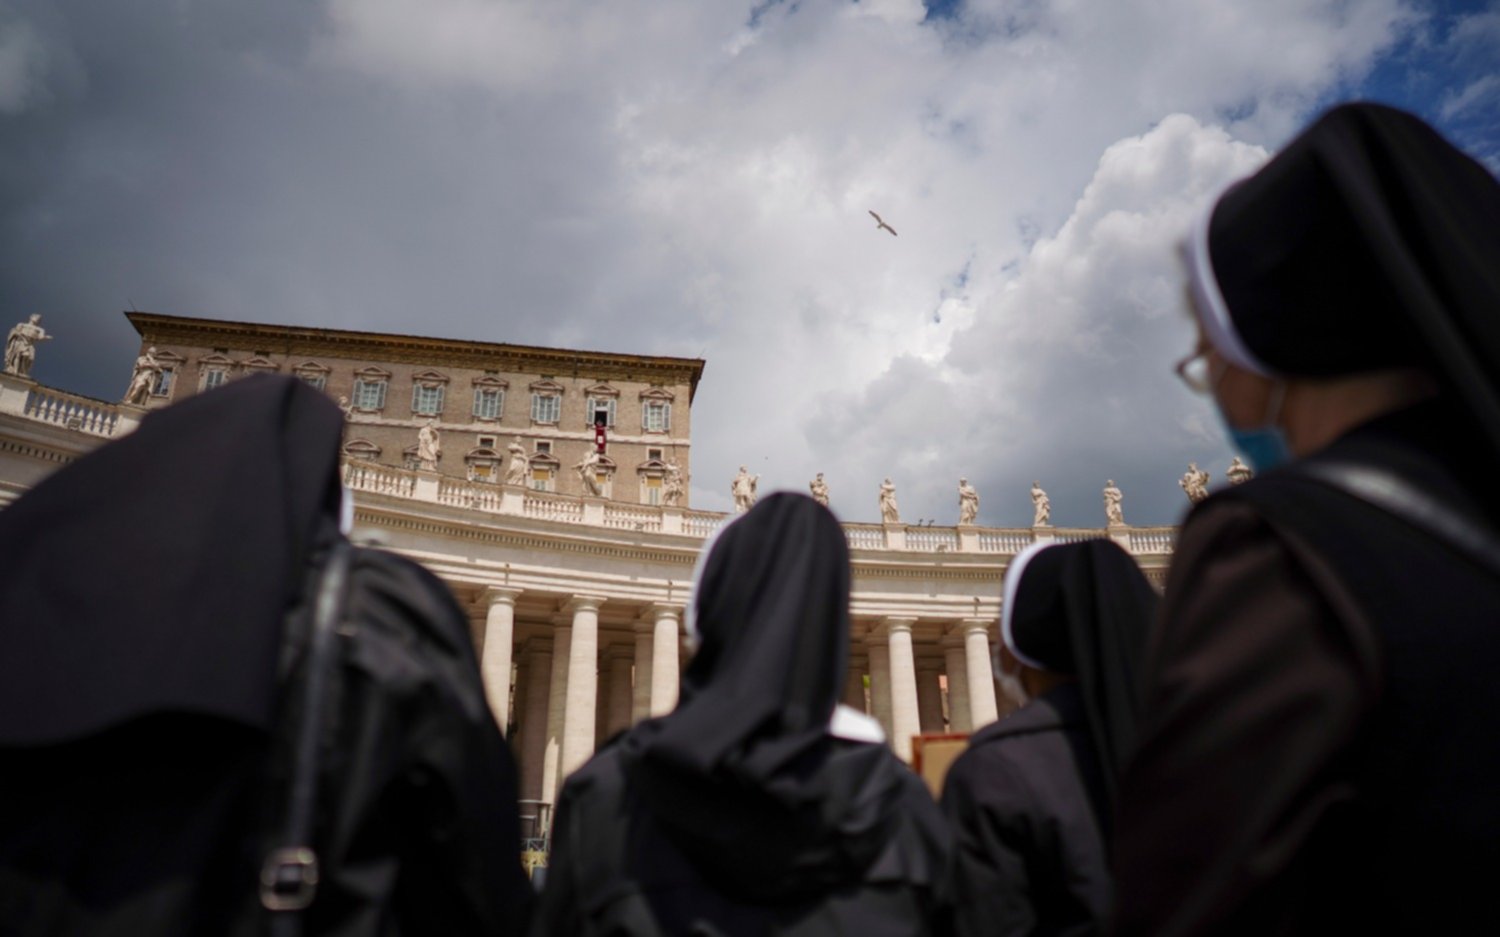 Francisco reapareció en el tradicional balcón del Vaticano: "Extrañaba la plaza", dijo